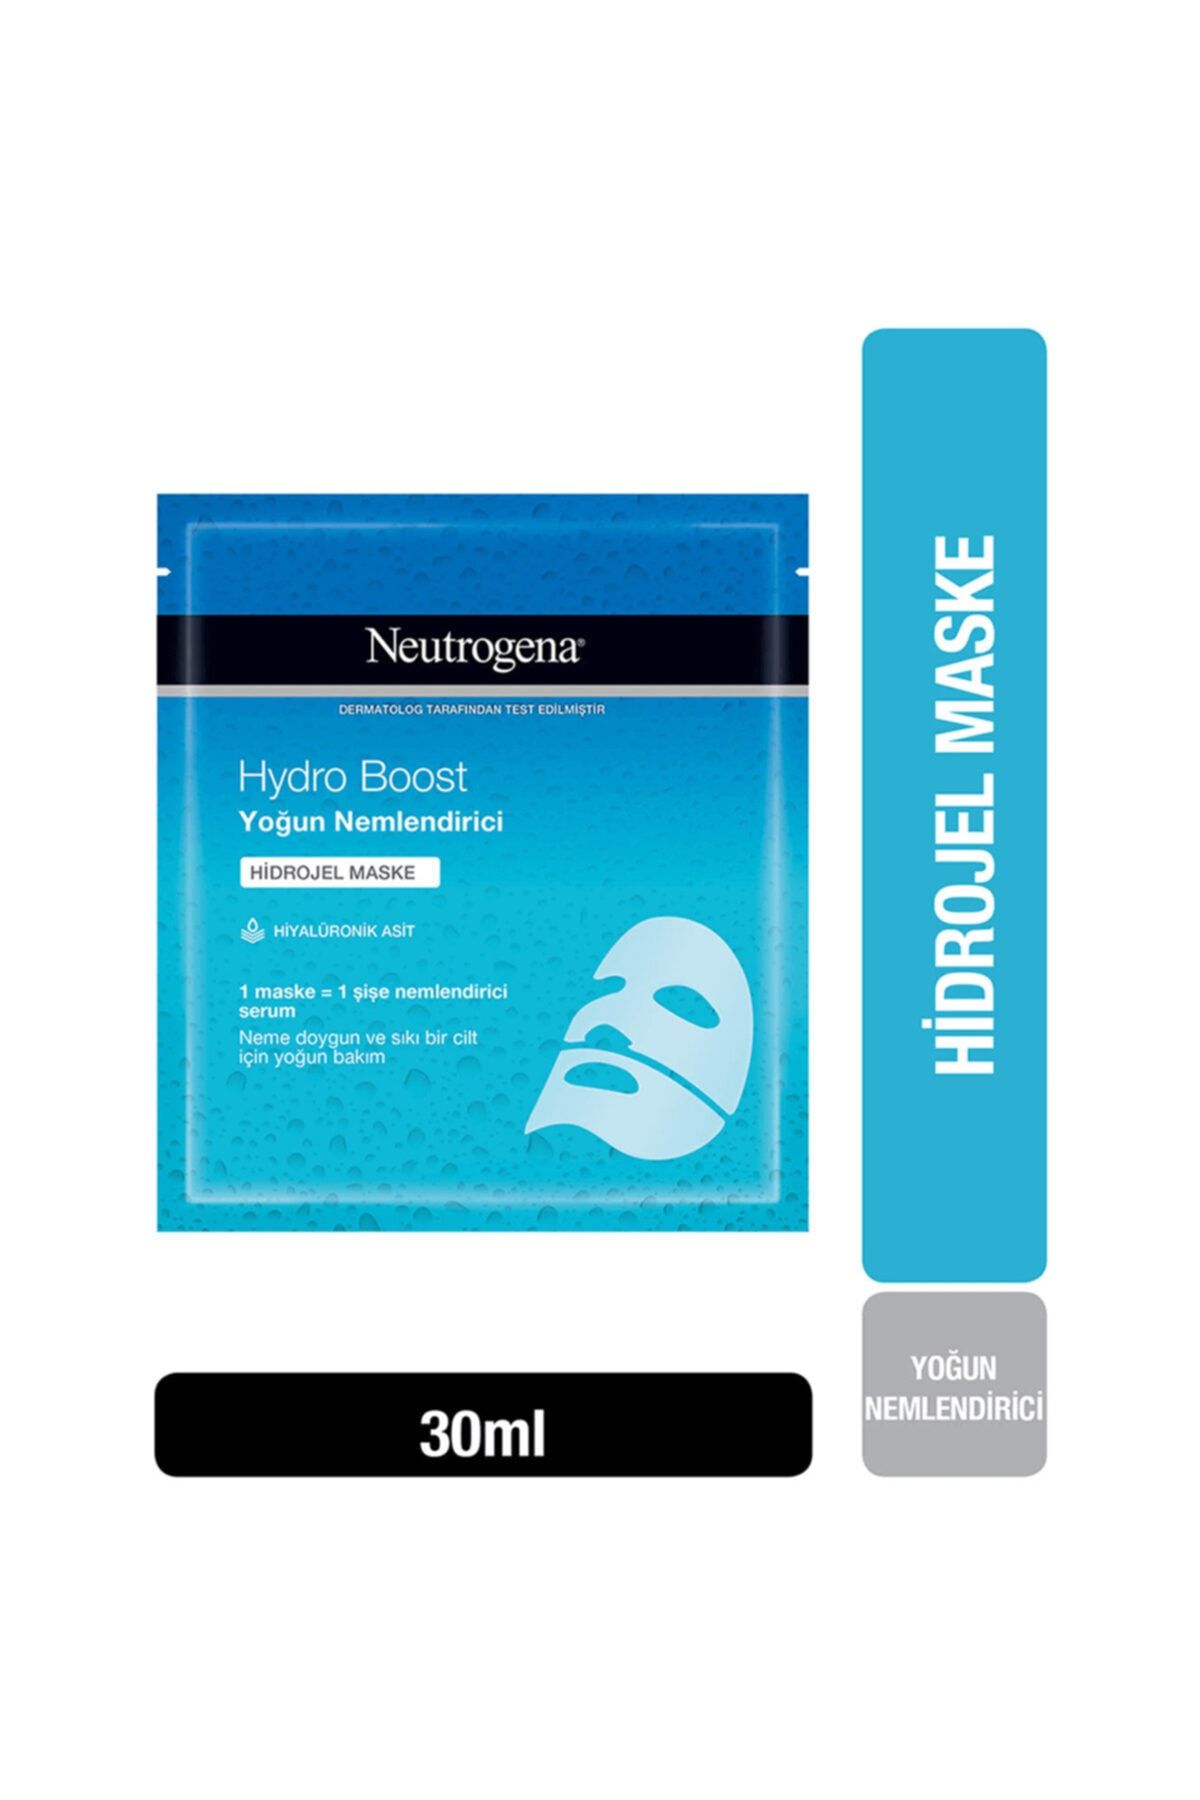 Neutrogena Hydro Boost Yoğun Nemlendirici Hidrolist Maske 30ml